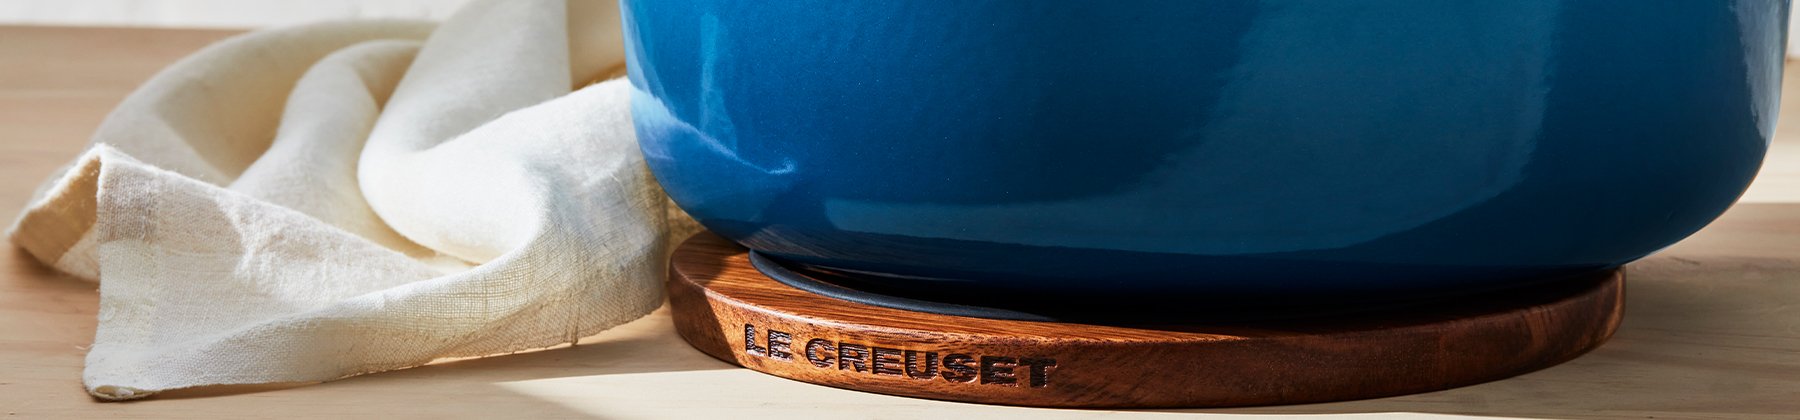 Photo of Le Creuset magnetic trivet.